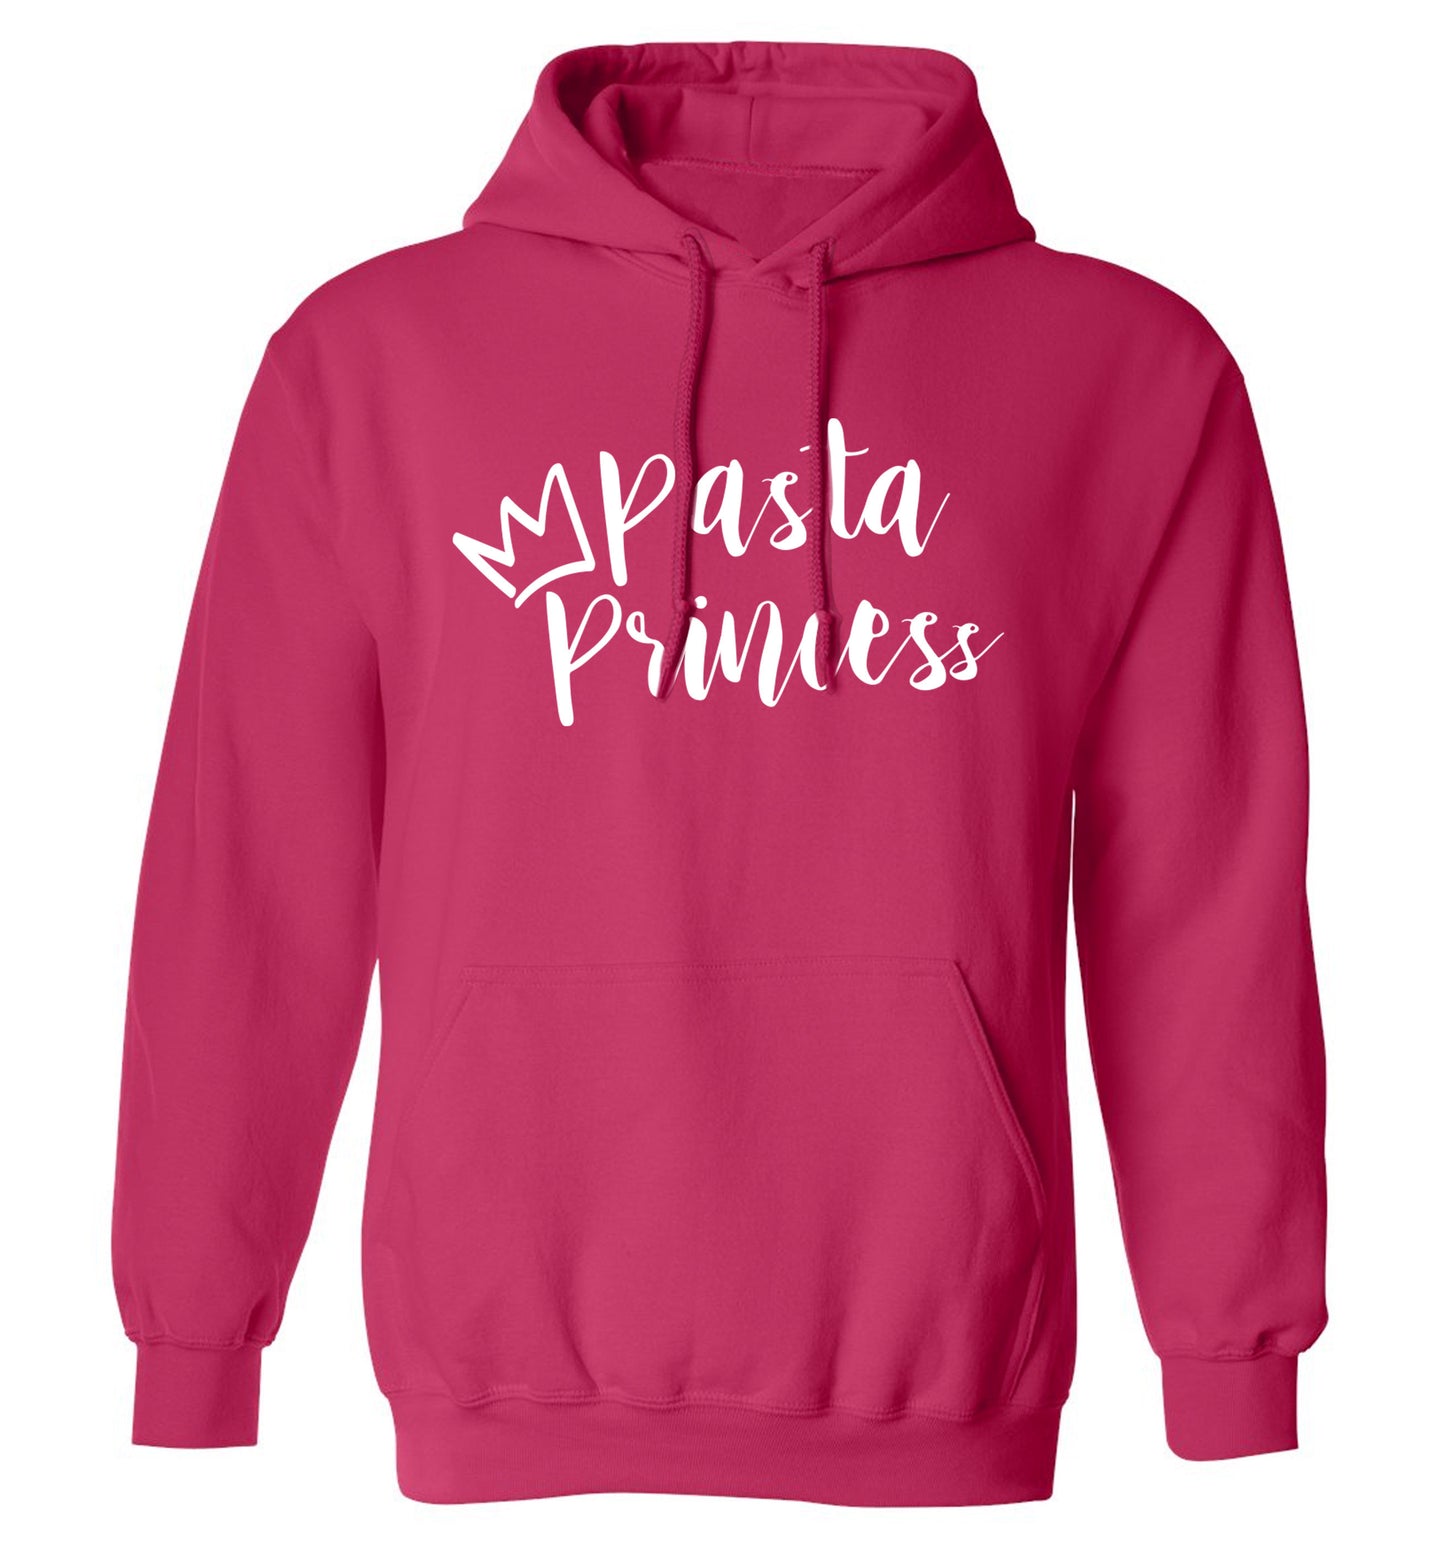 Pasta Princess adults unisex pink hoodie 2XL